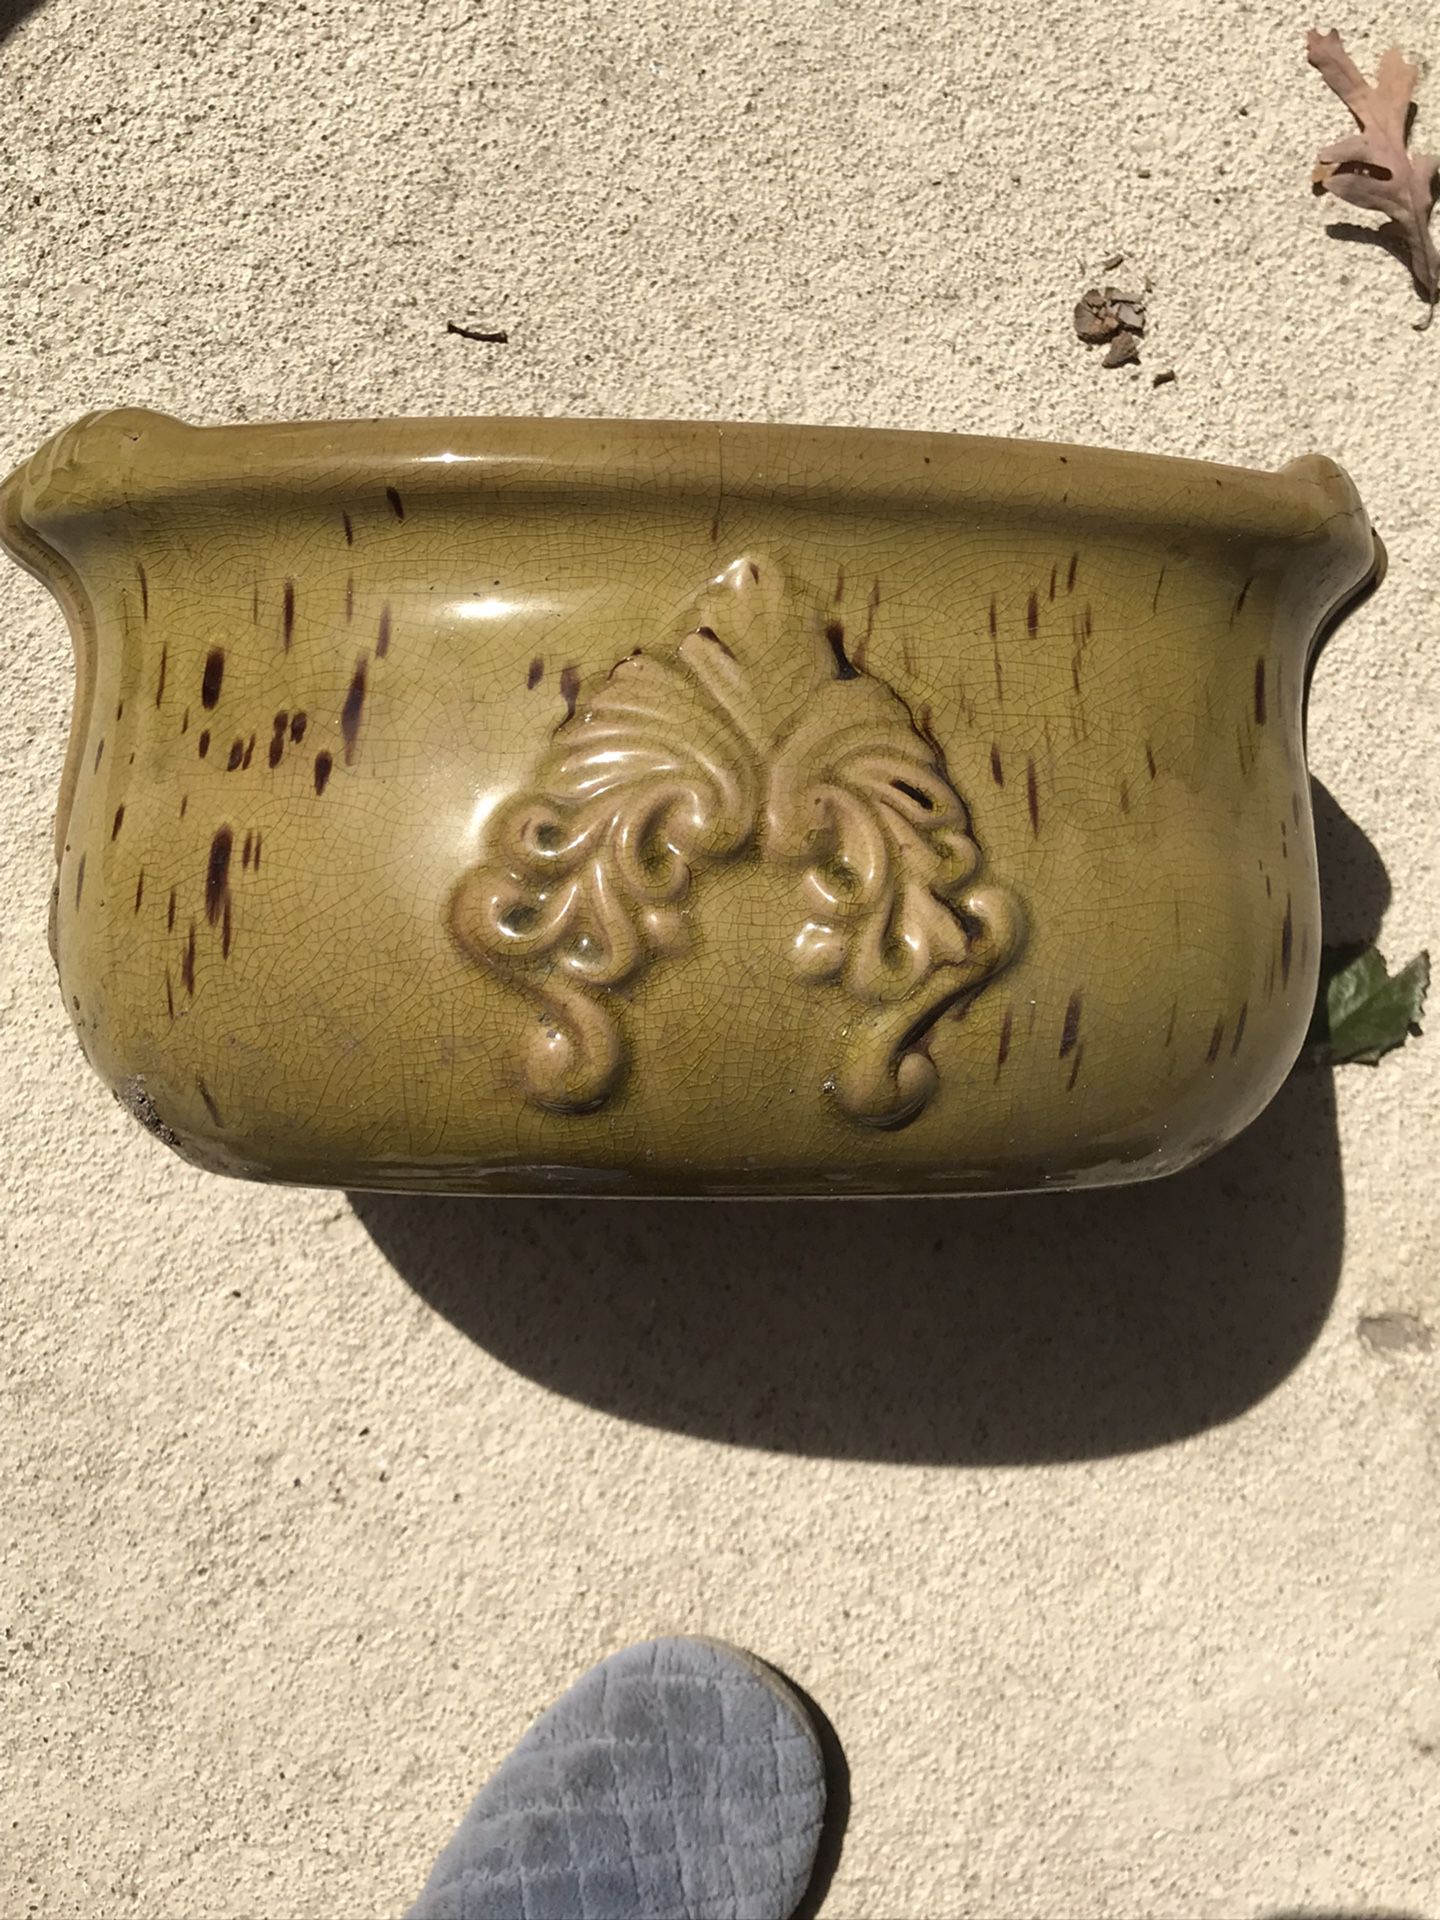 Green Ceramic Planter